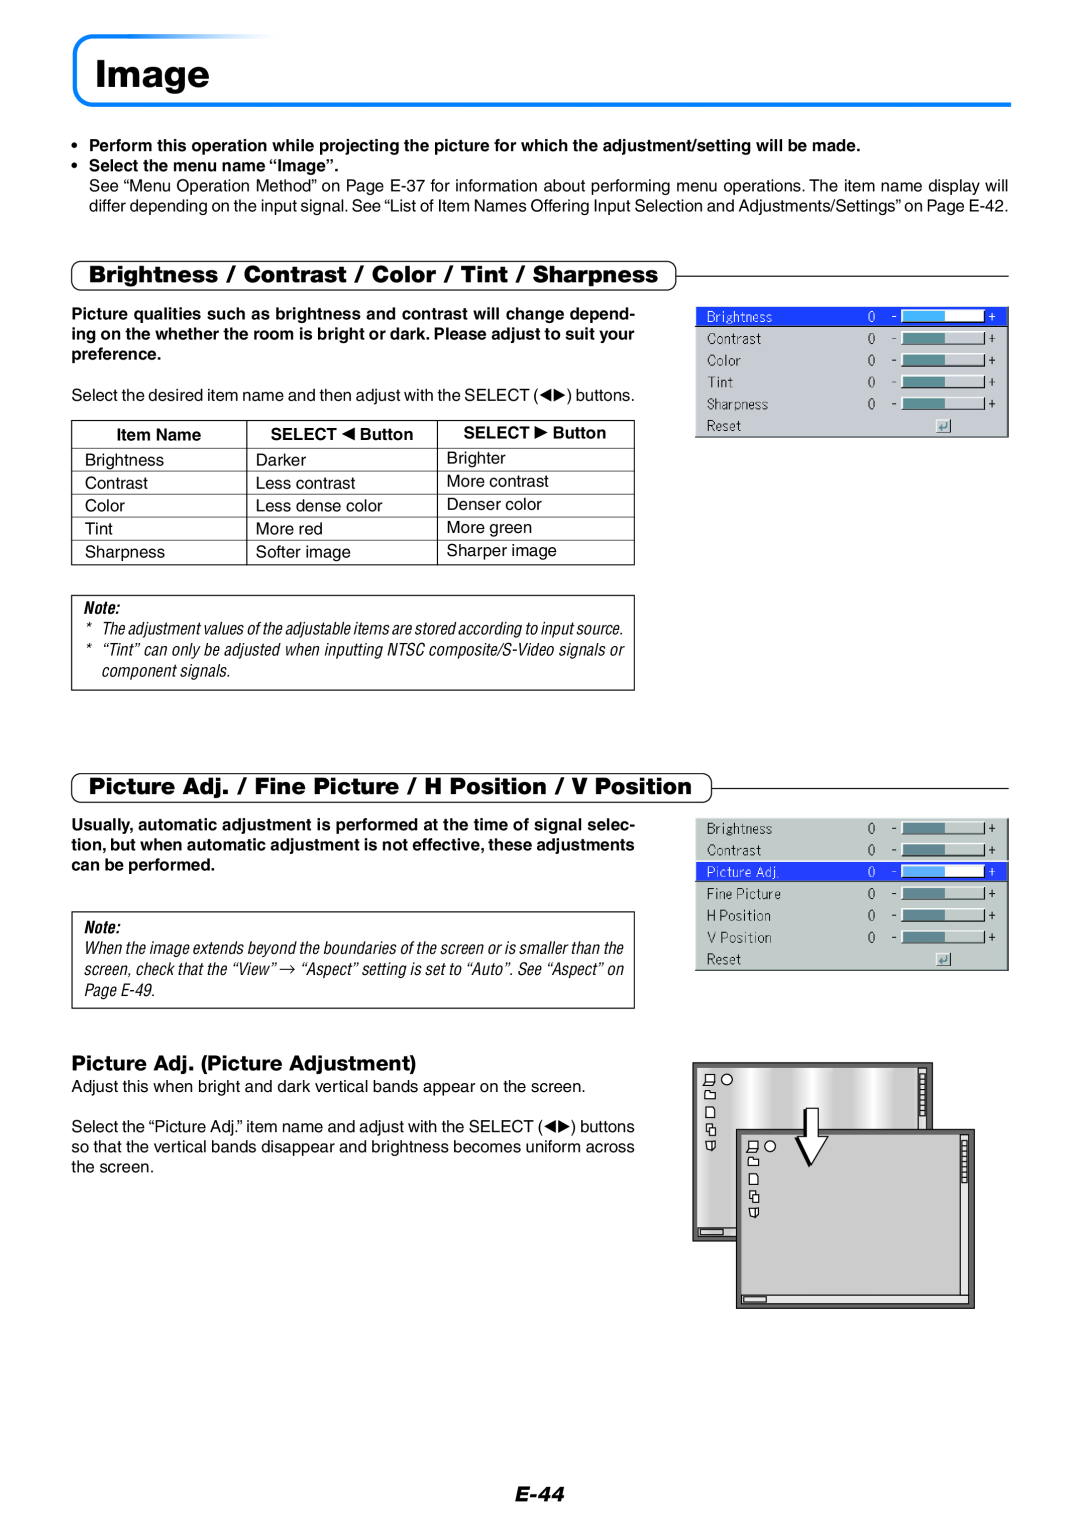 PLUS Vision U7-137, U7-132h Image, Brightness / Contrast / Color / Tint / Sharpness, Picture Adj. Picture Adjustment, E-44 